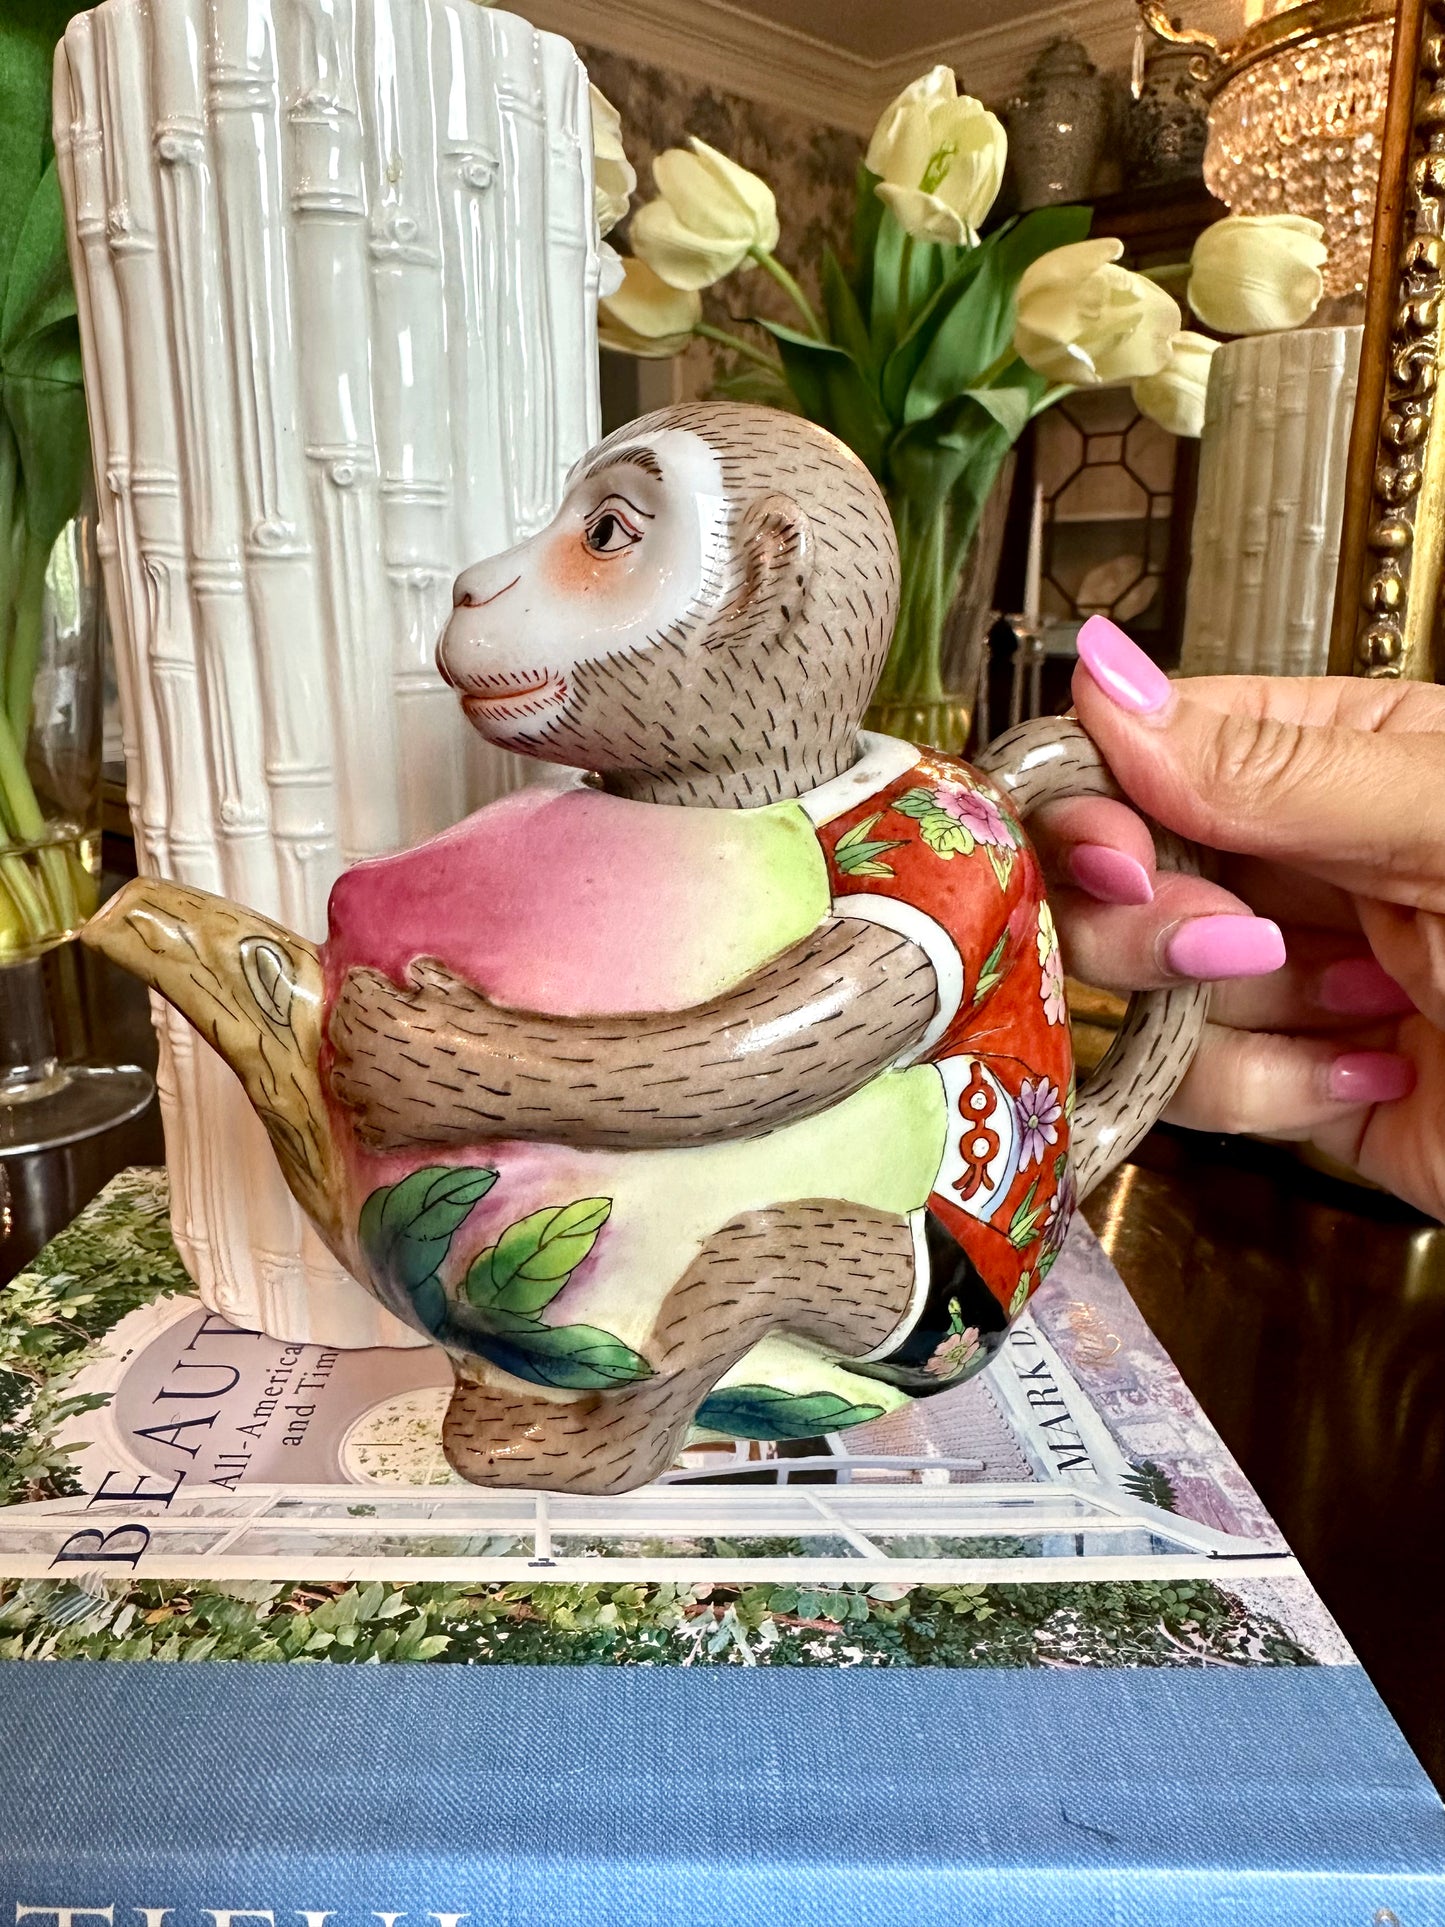 Cute Andrea Sadek Monkey Teapot Figural